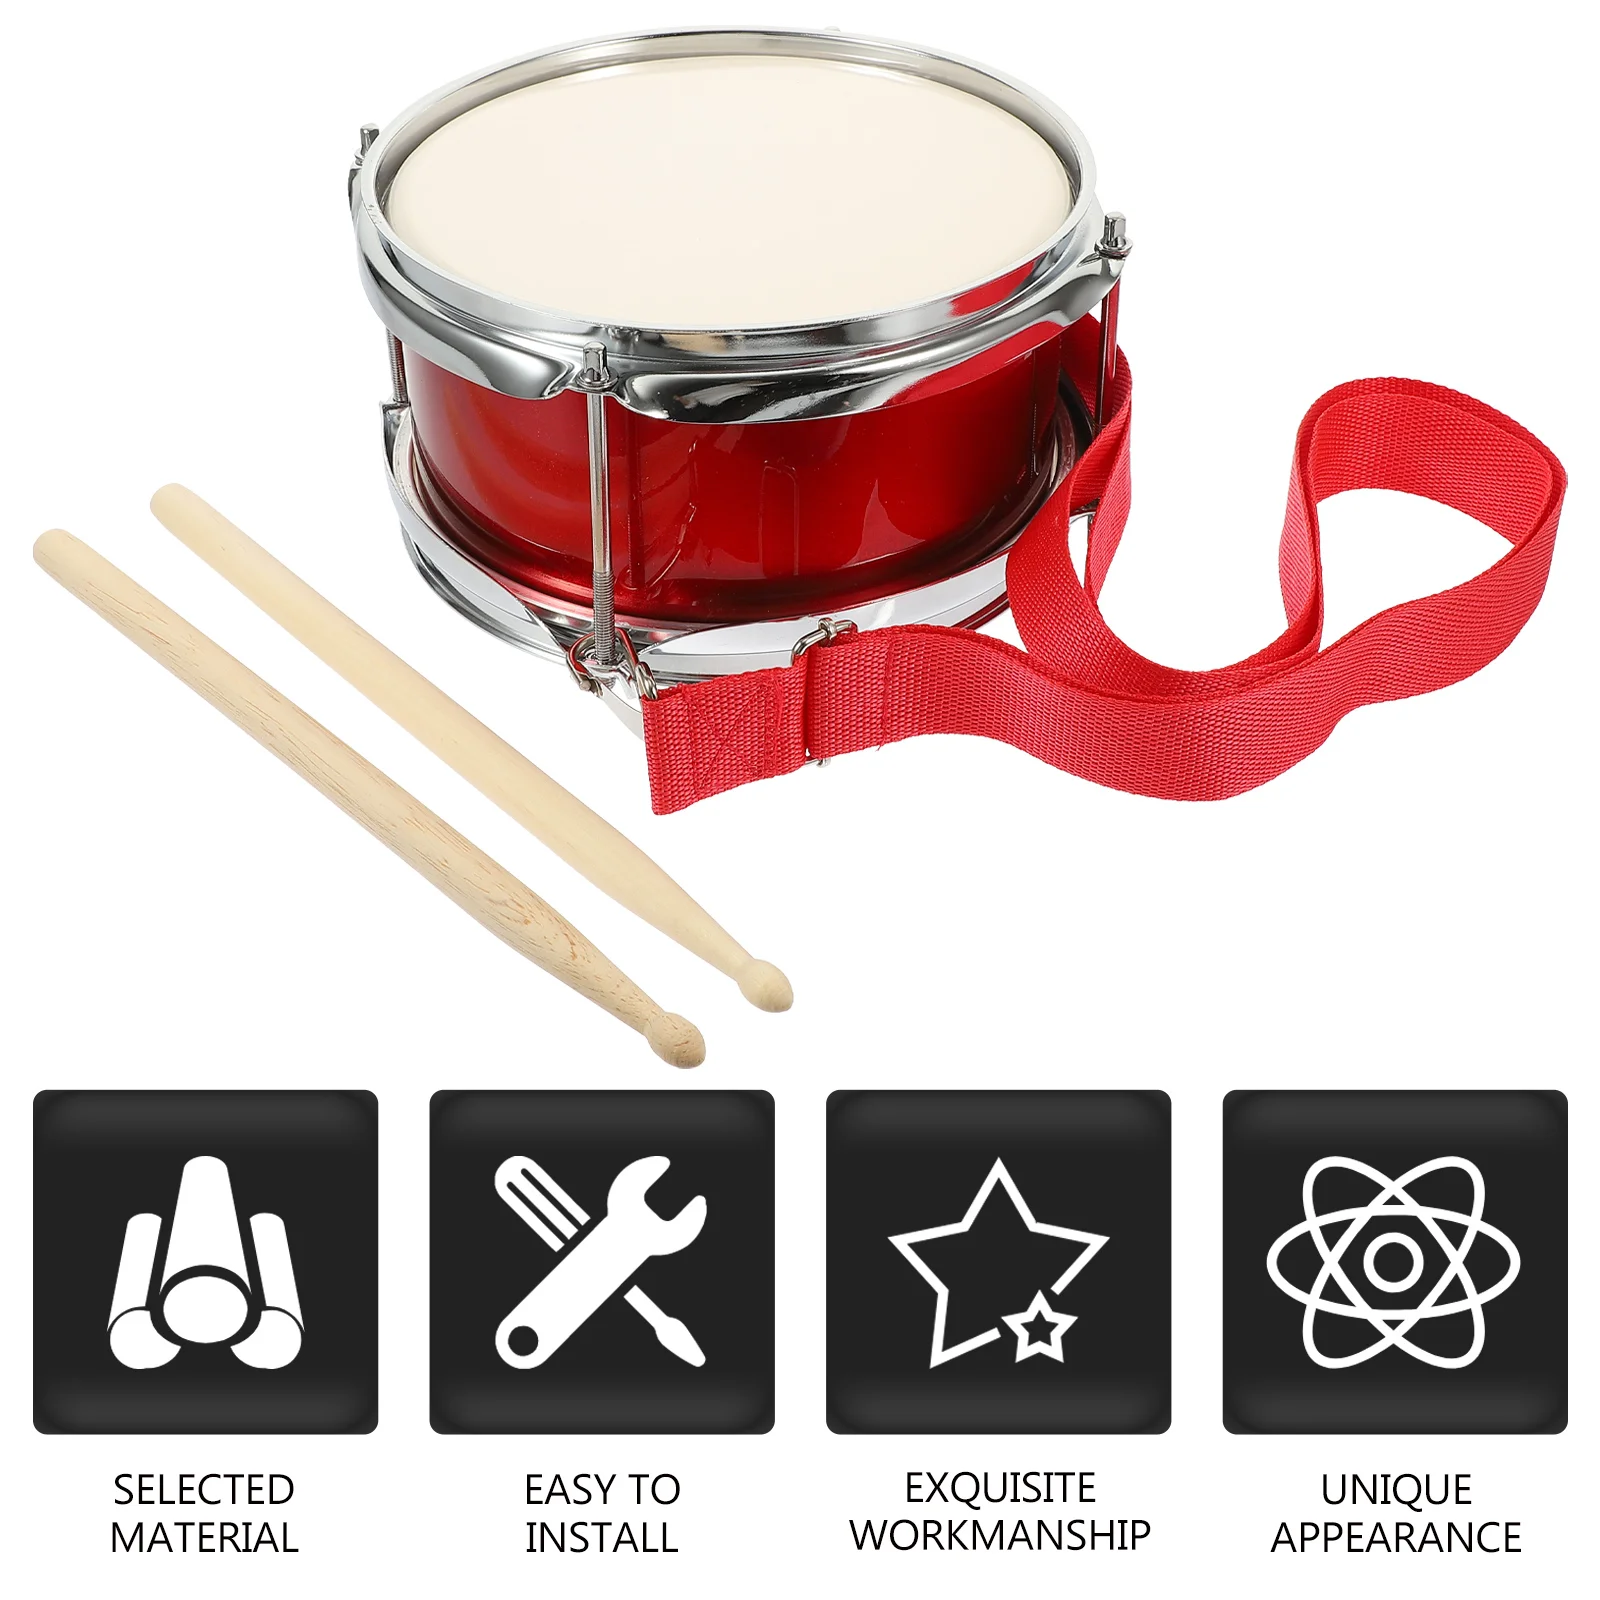 

Vaguelly Snare Drum Hand Drum Sticks Shoulder Strap Red Percussion Musical Instruments Kids Children